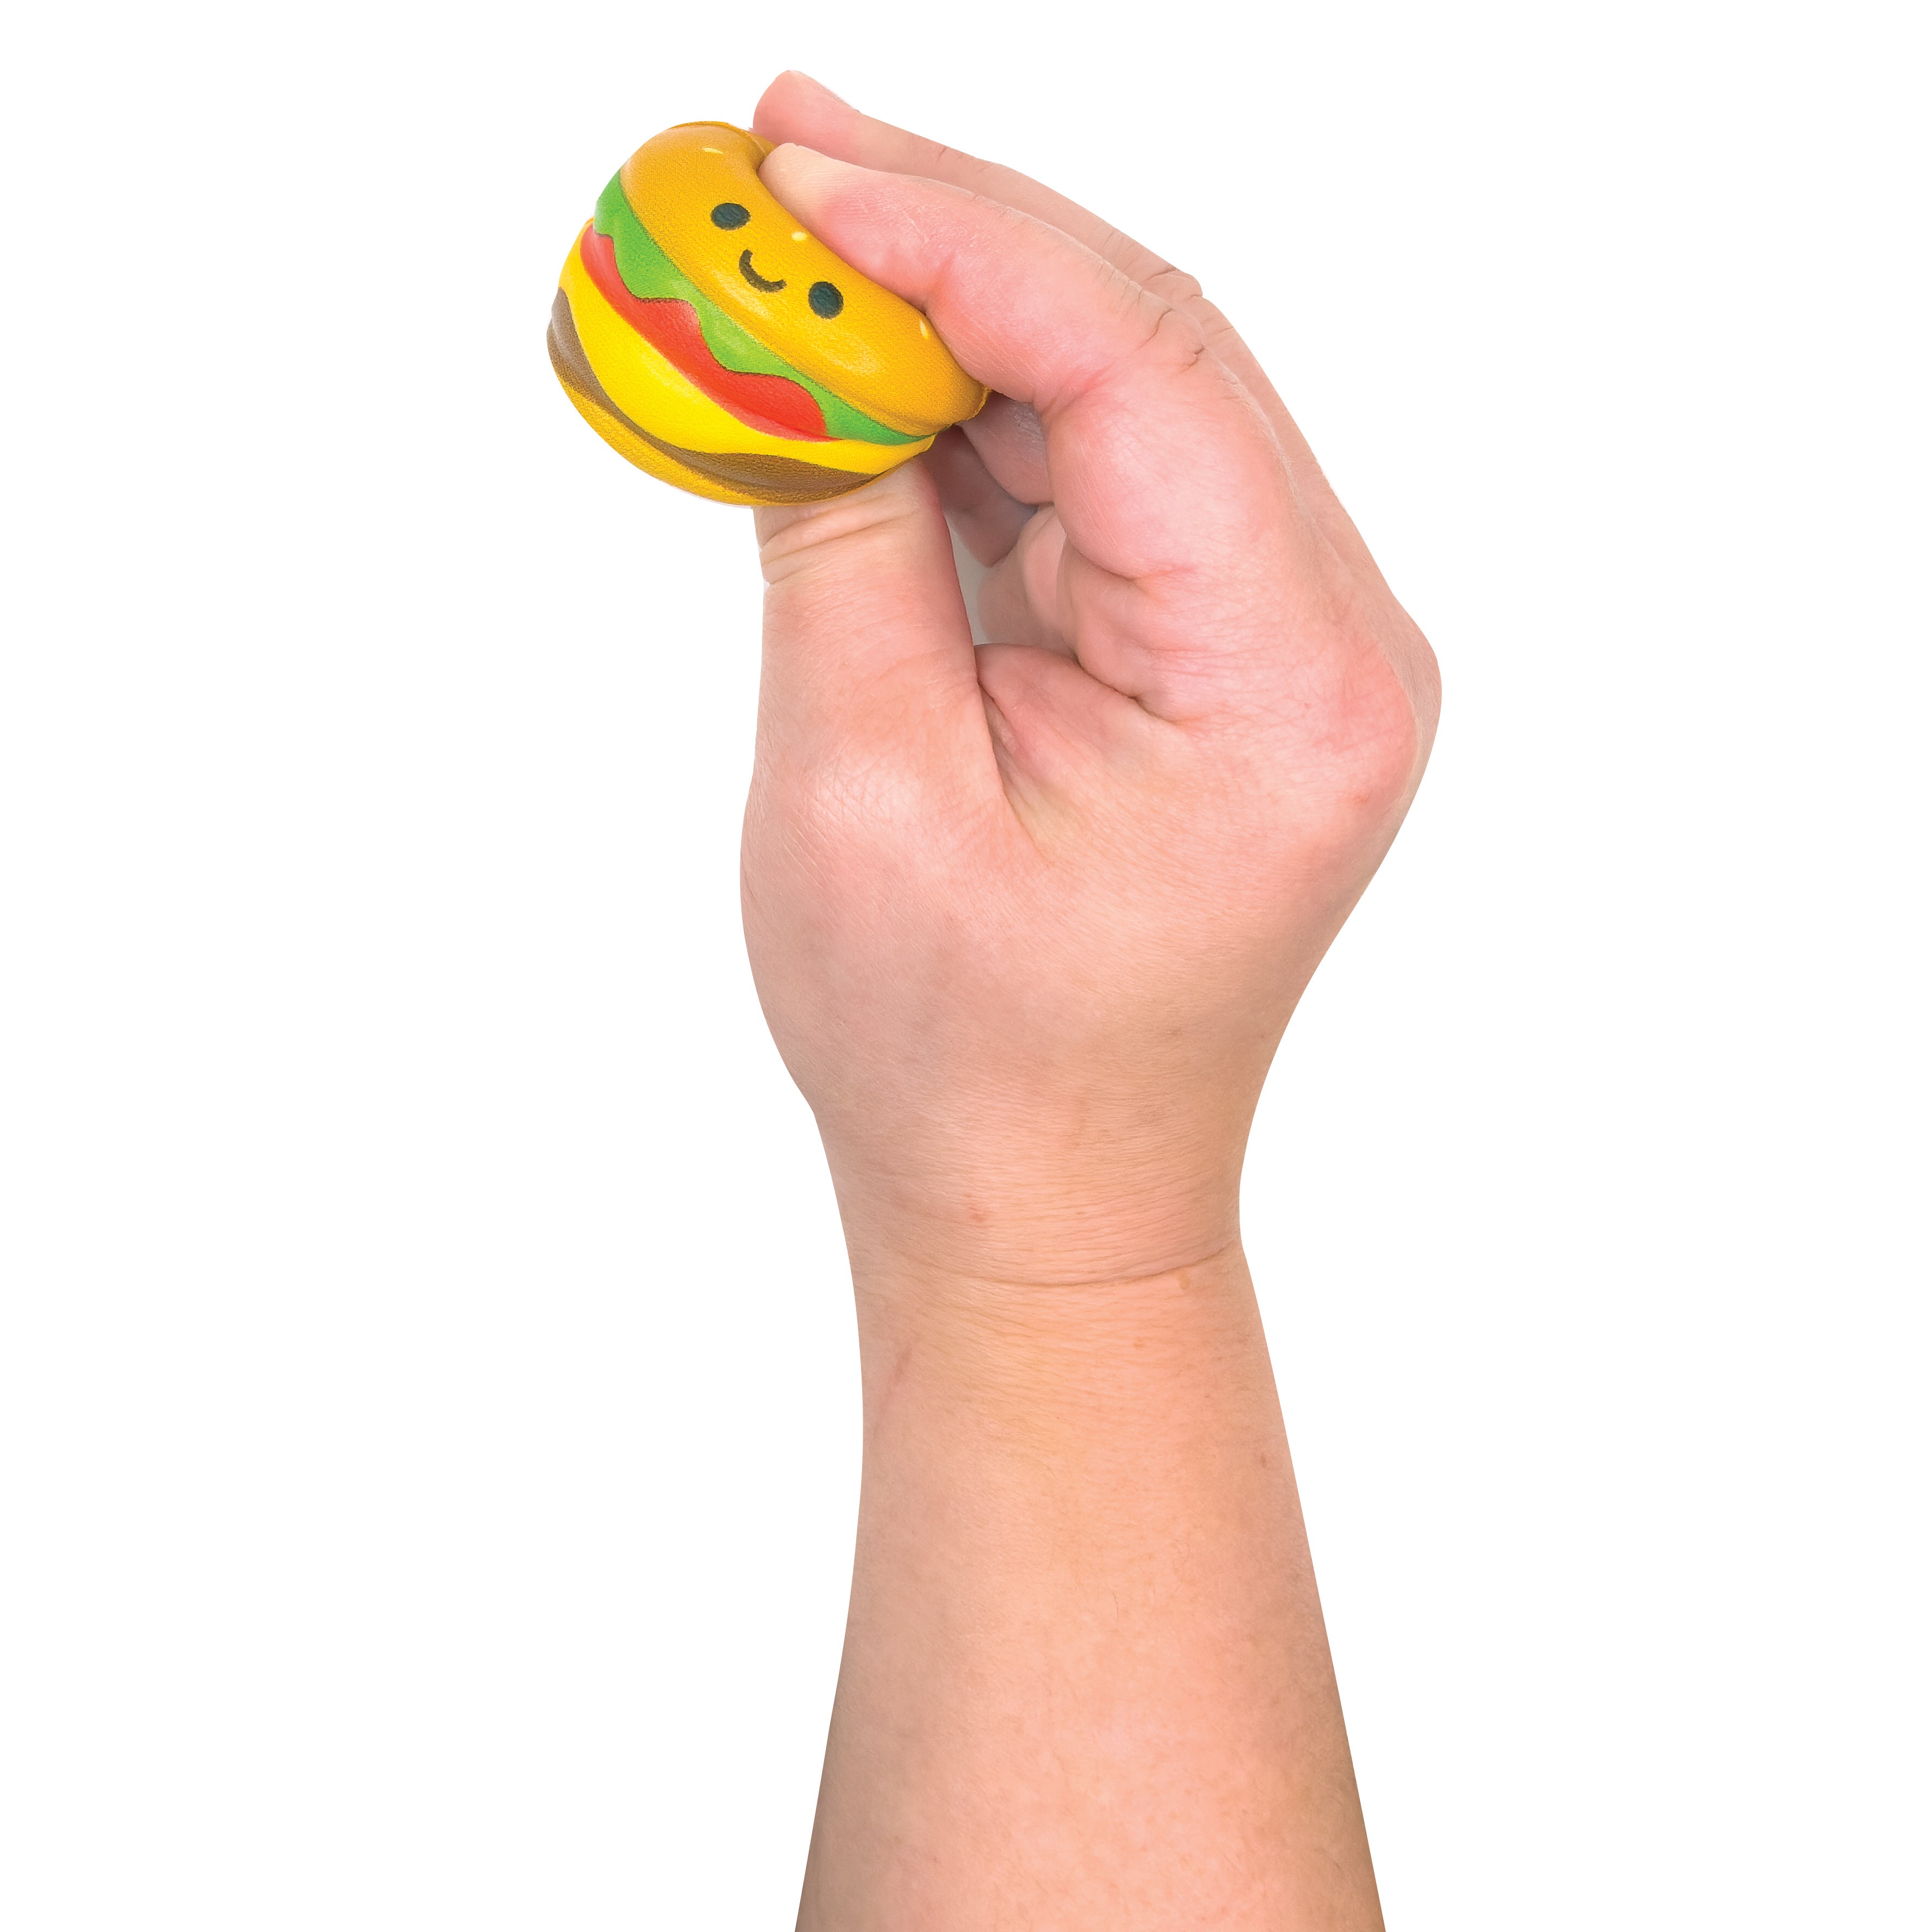 2” Micro Squishy Toy Assortment